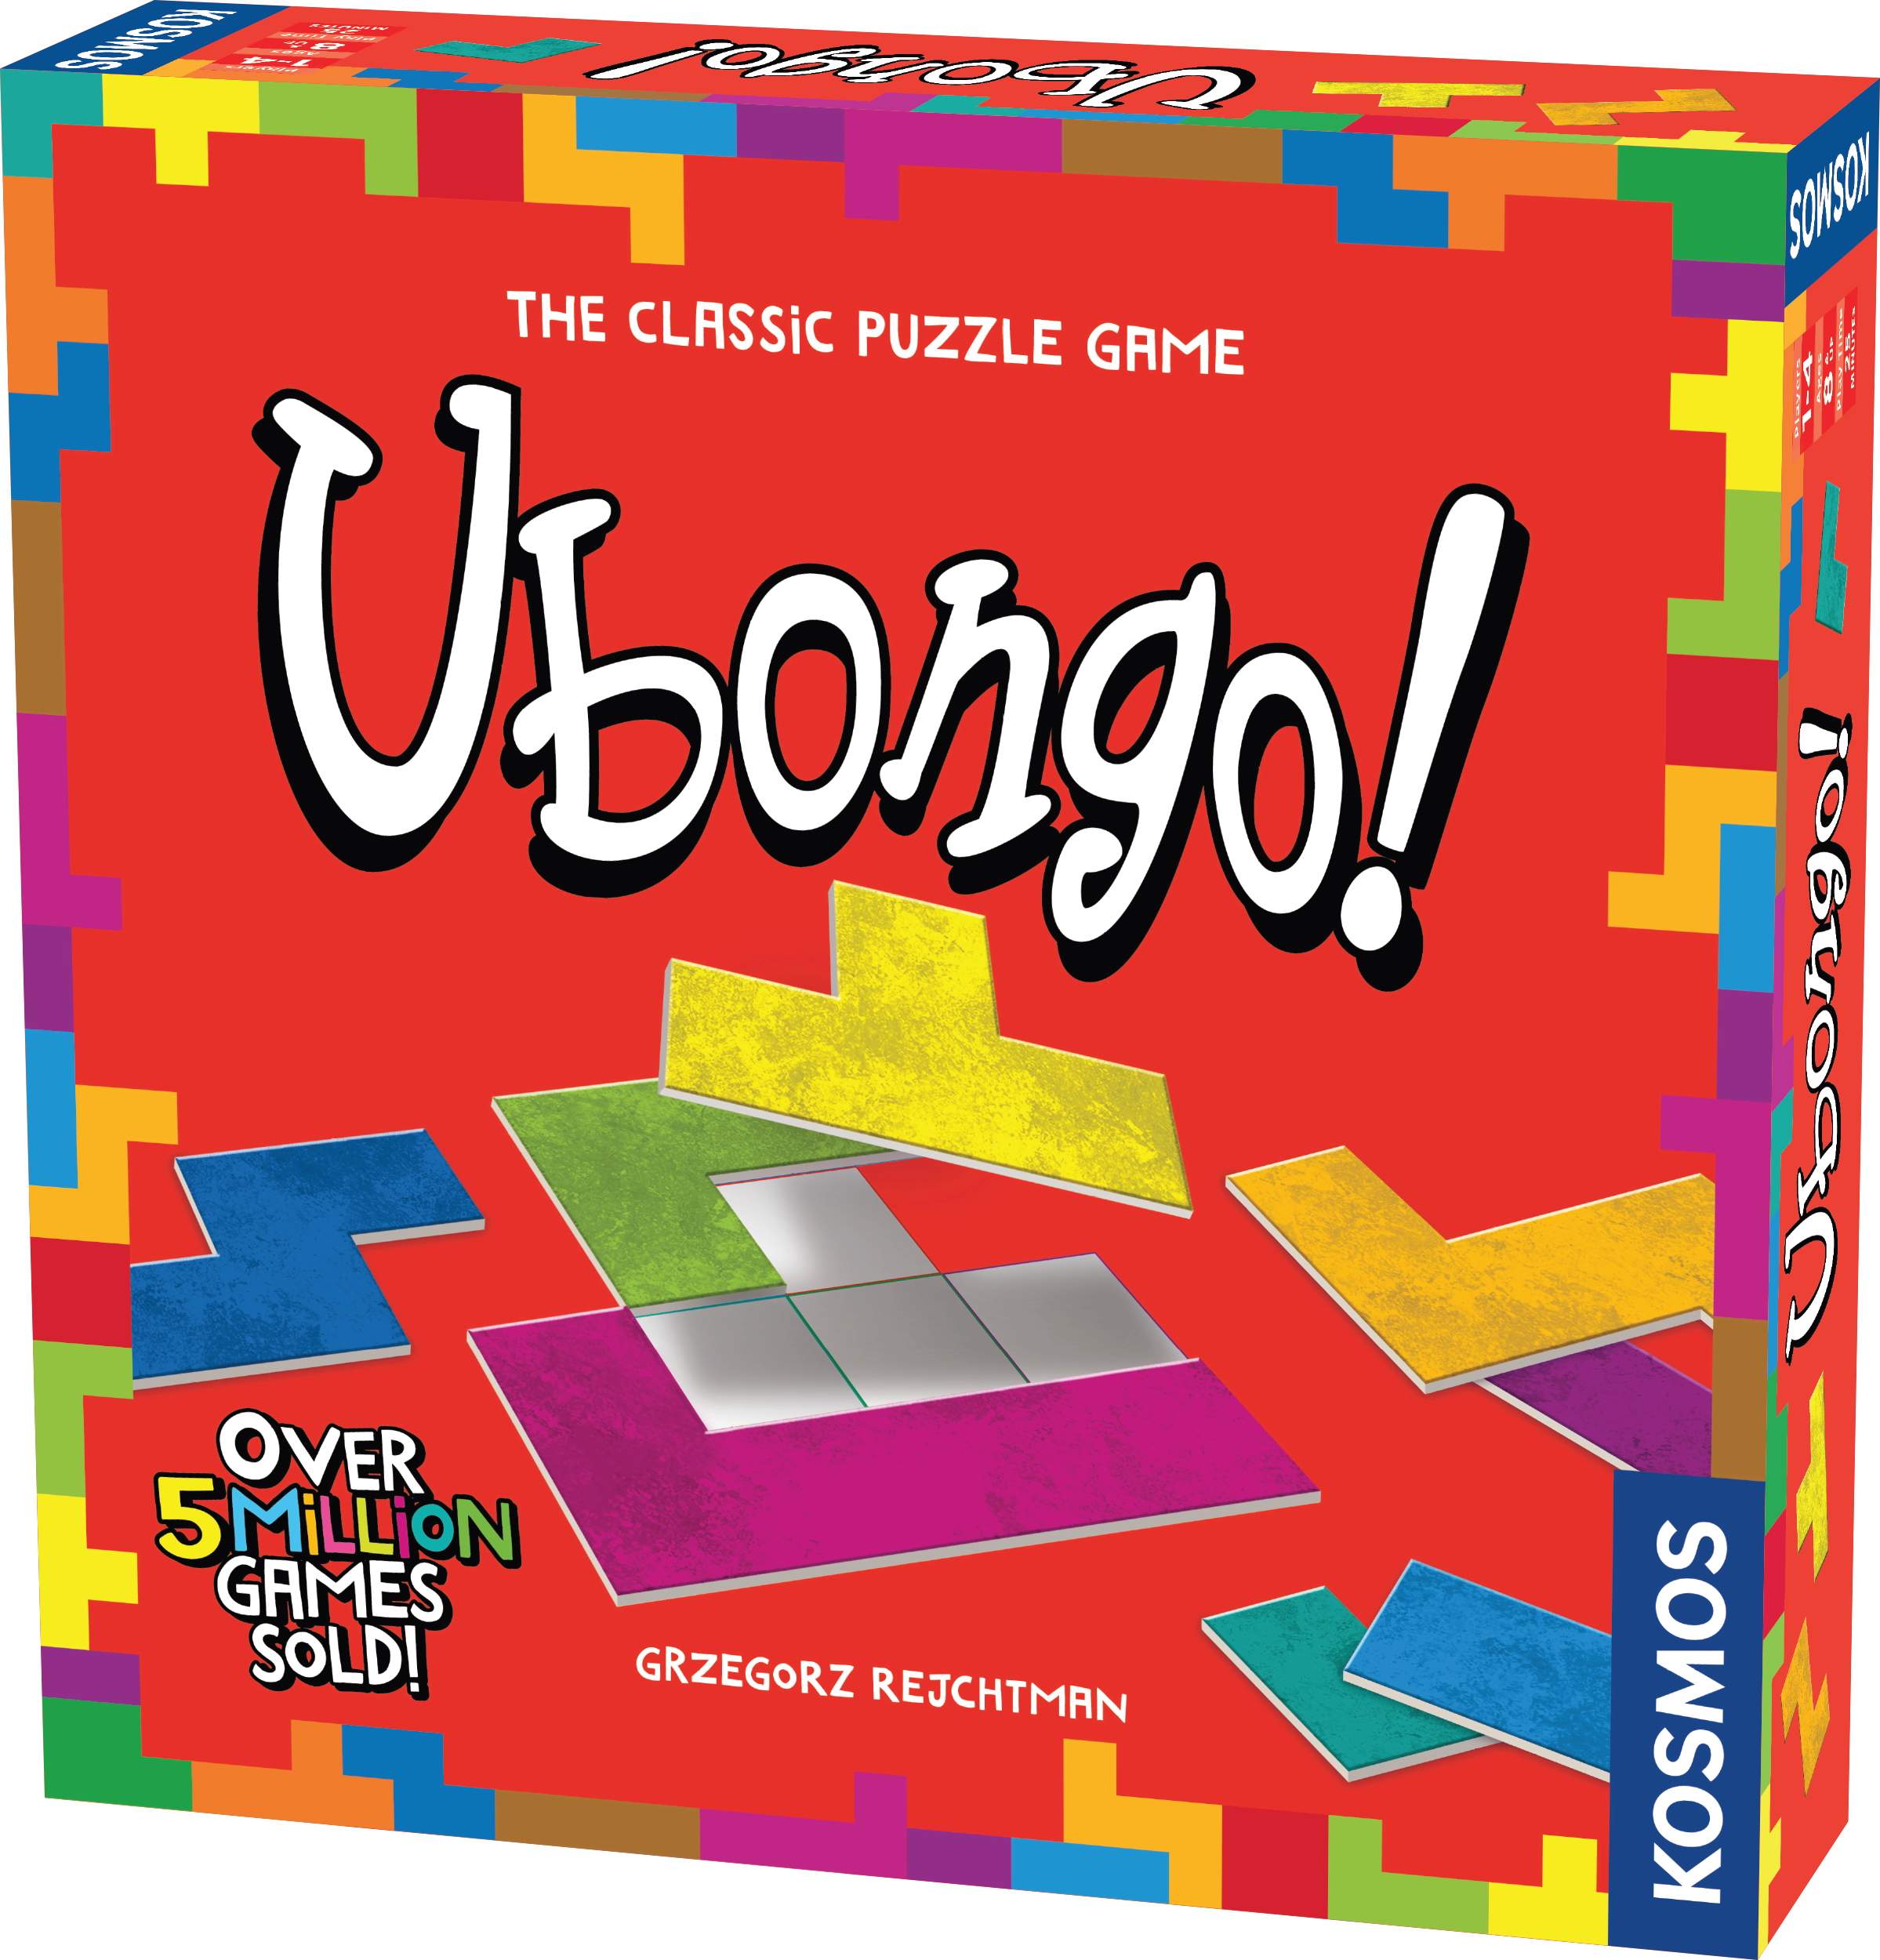 Ubongo! - The Classic Puzzle Game    